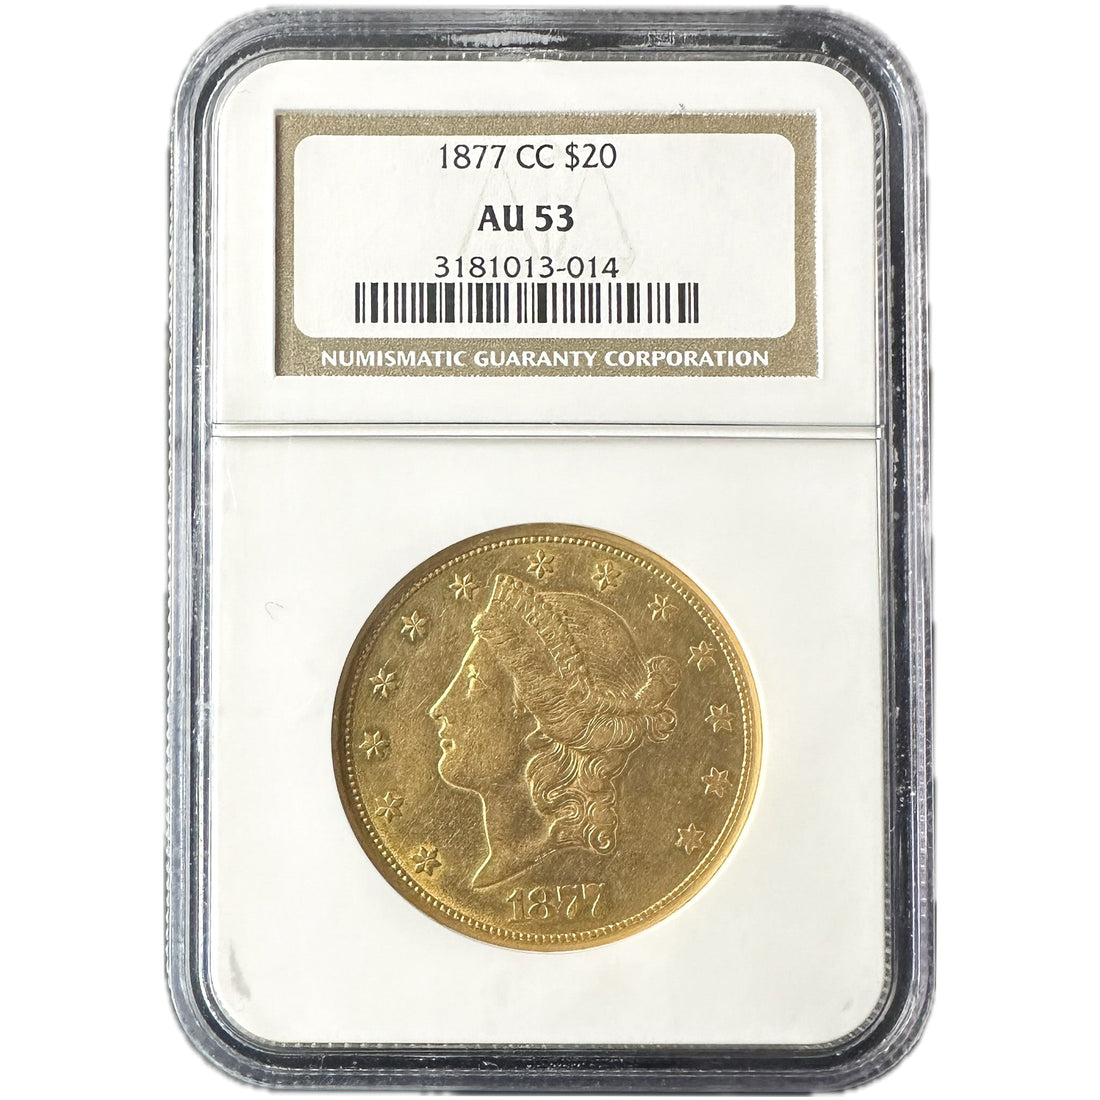 1877 CC GOLD LIBERTY HEAD US $20 Coin AU 53 - Oz Bullion